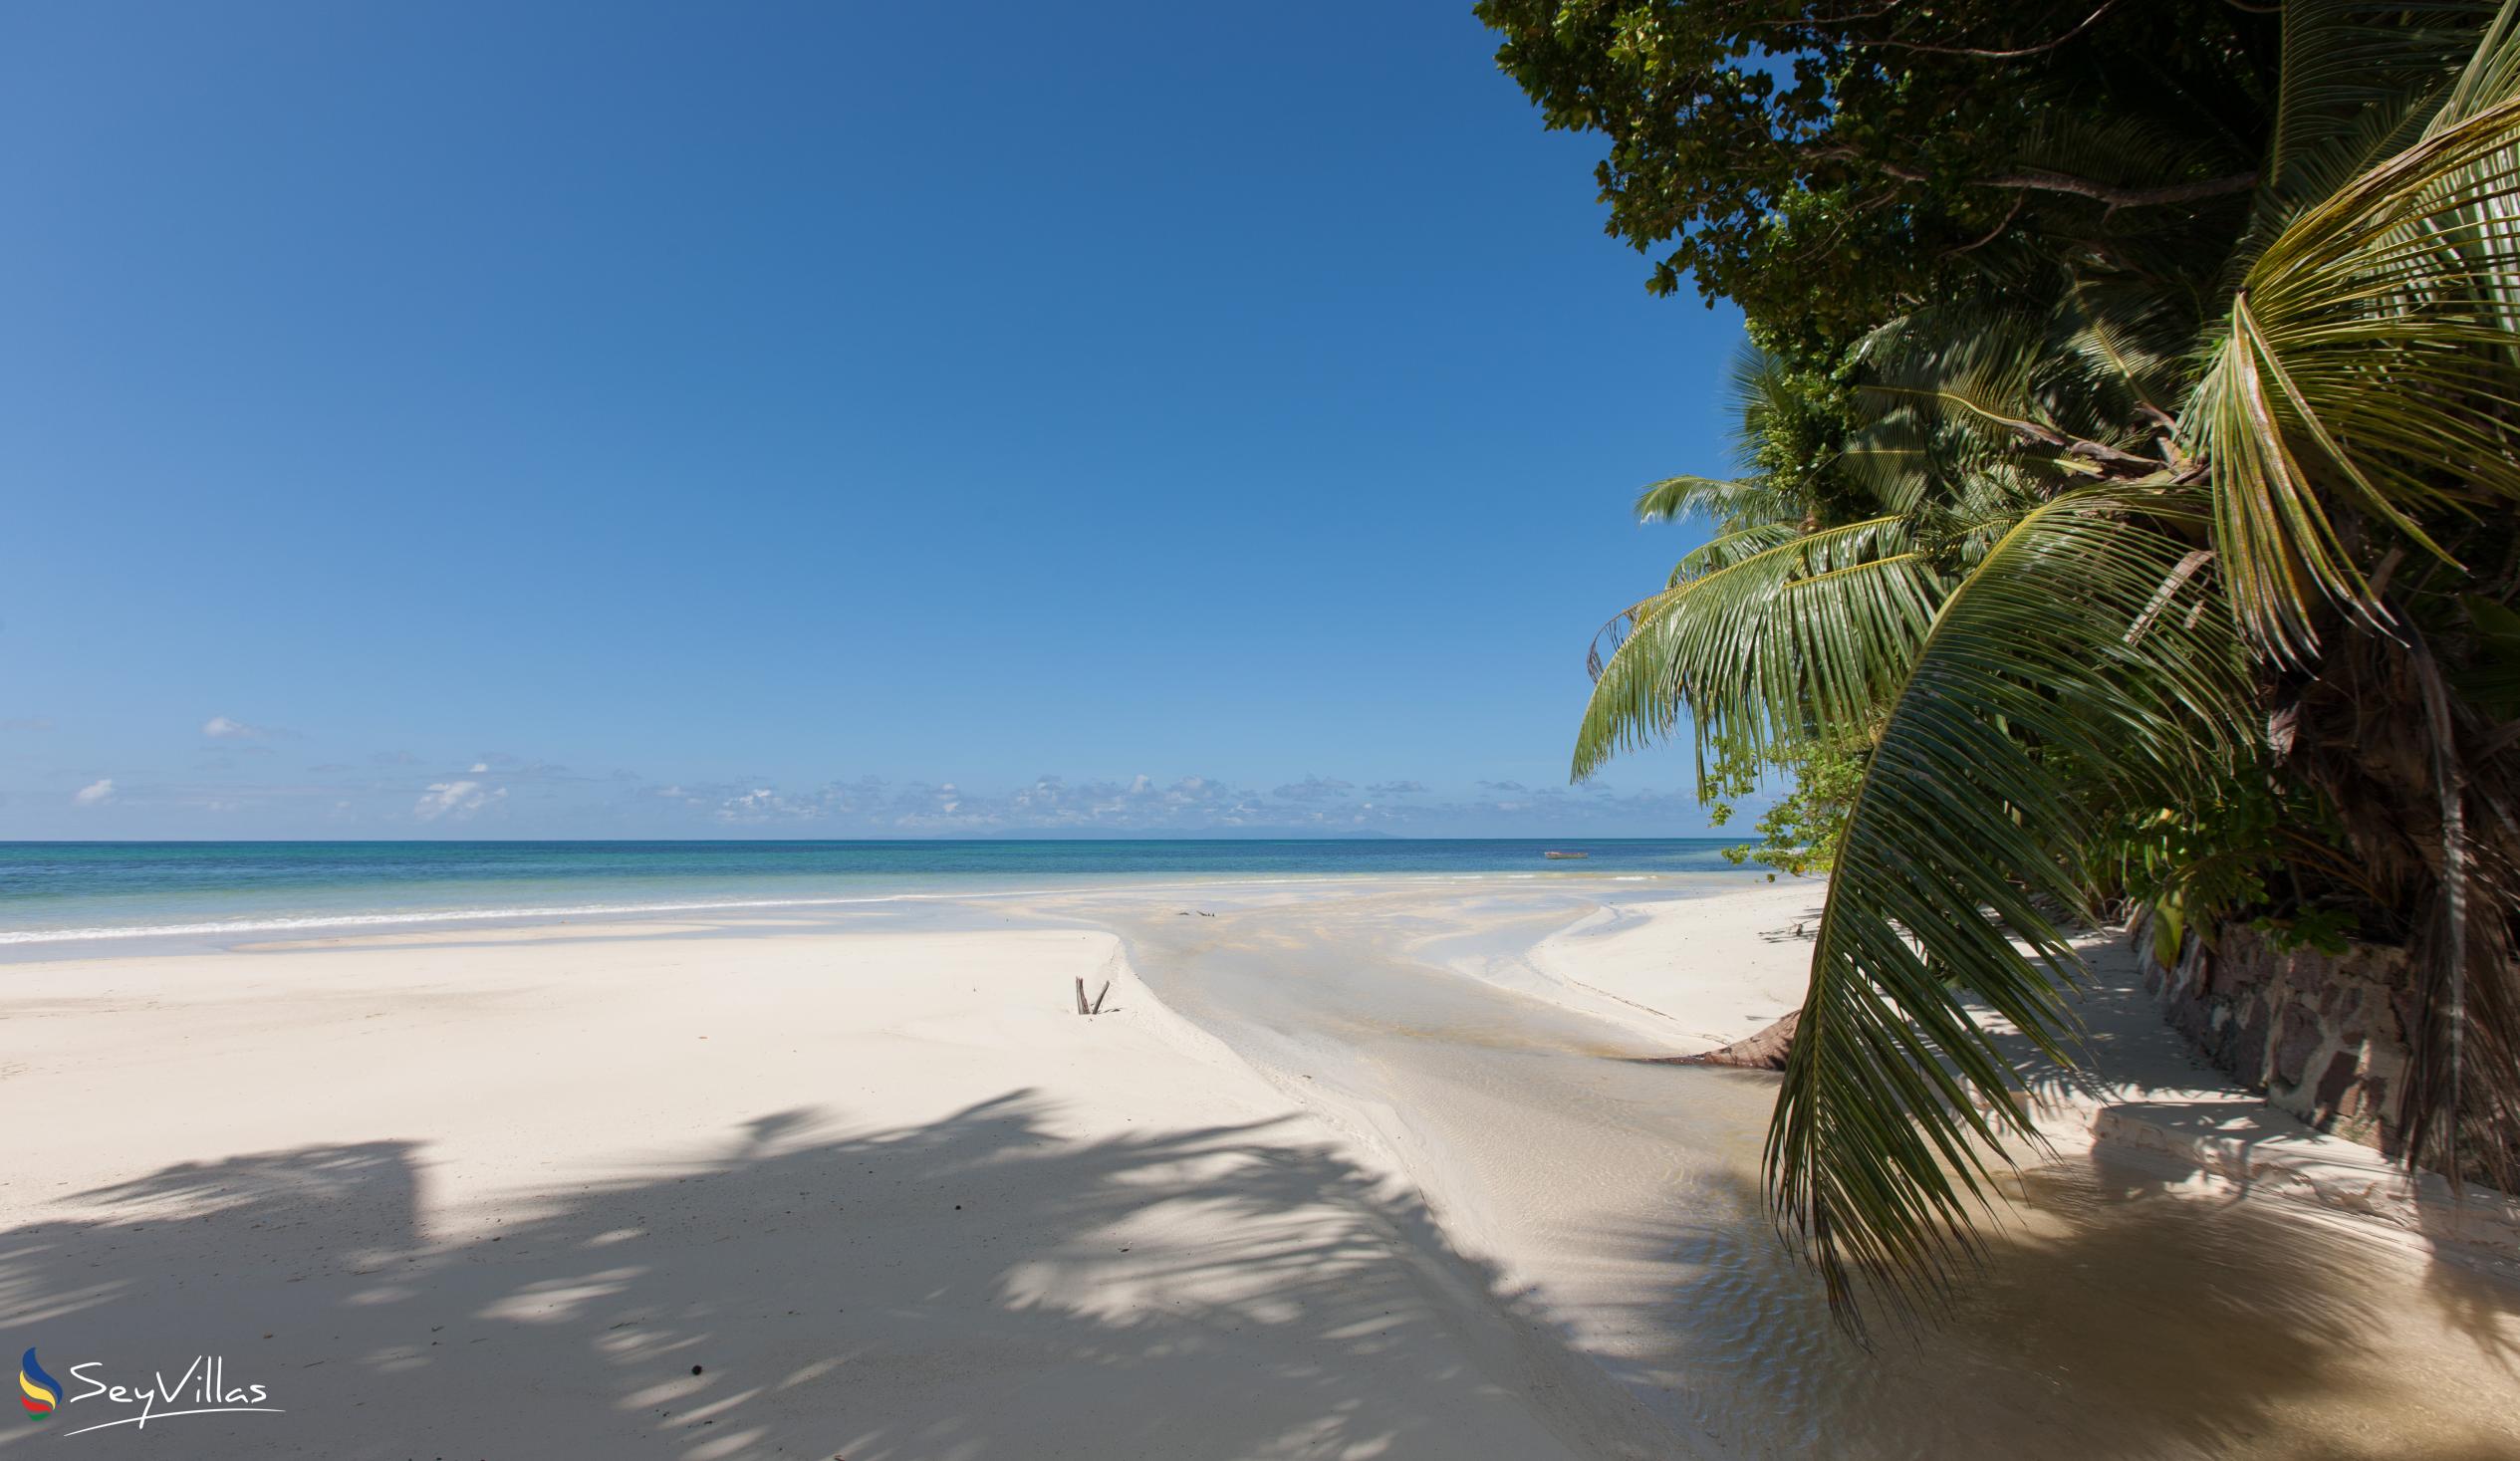 Photo 12: Anse St Sauveur - Praslin (Seychelles)